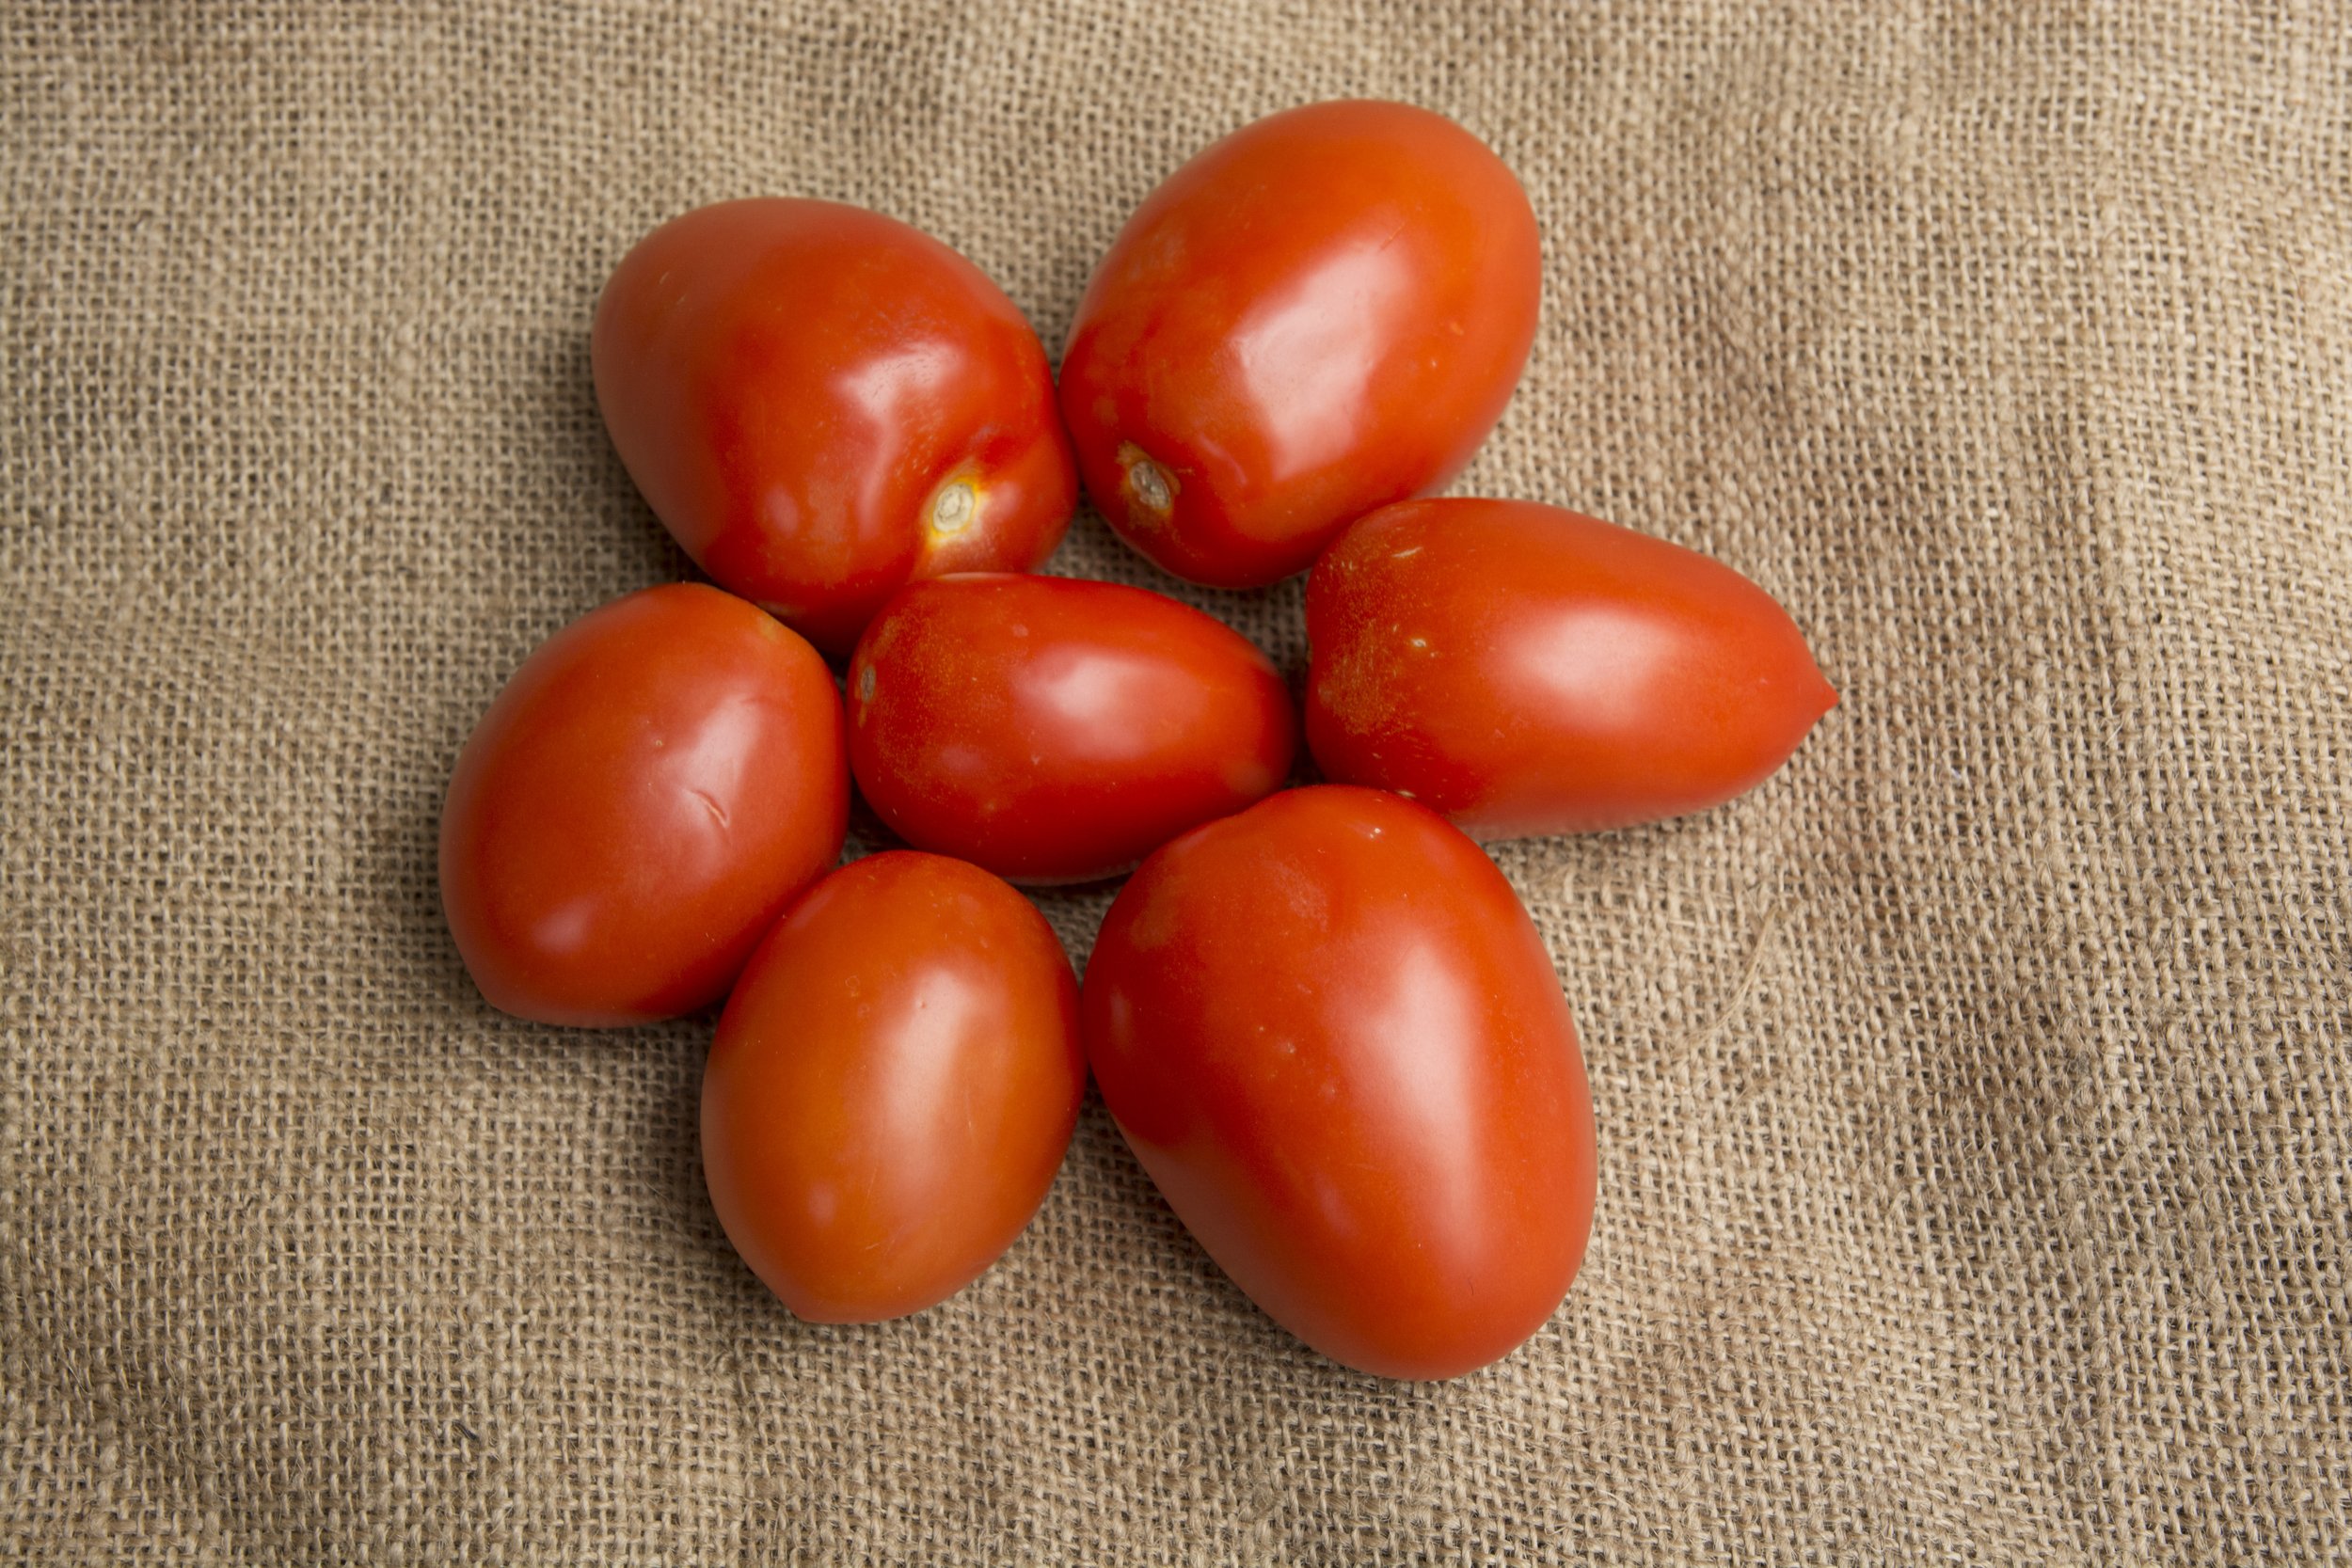 Roma Tomatoes $1.69/lb